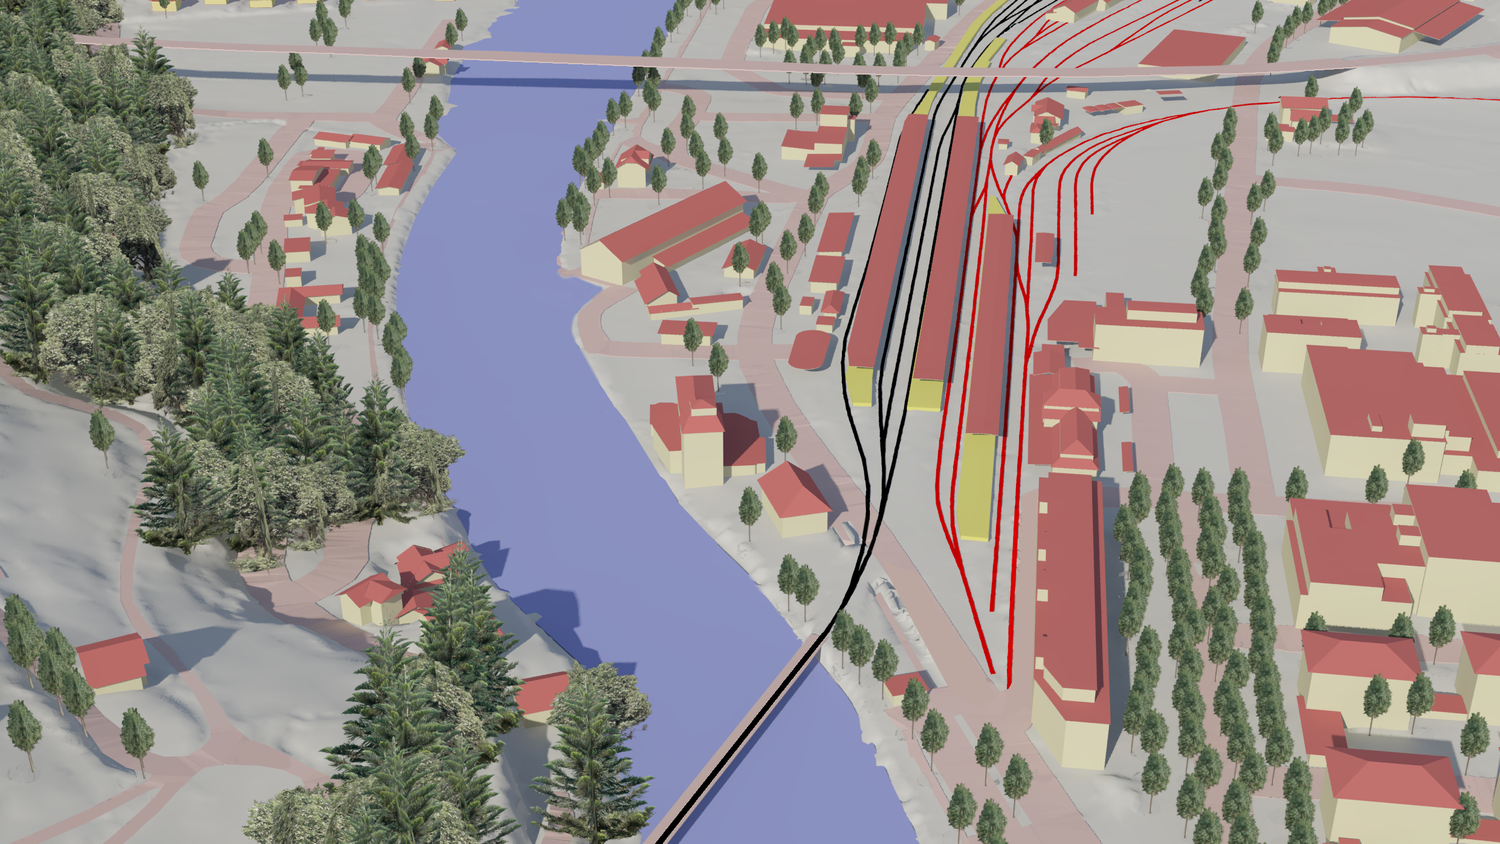 3D visualisation of Interlaken